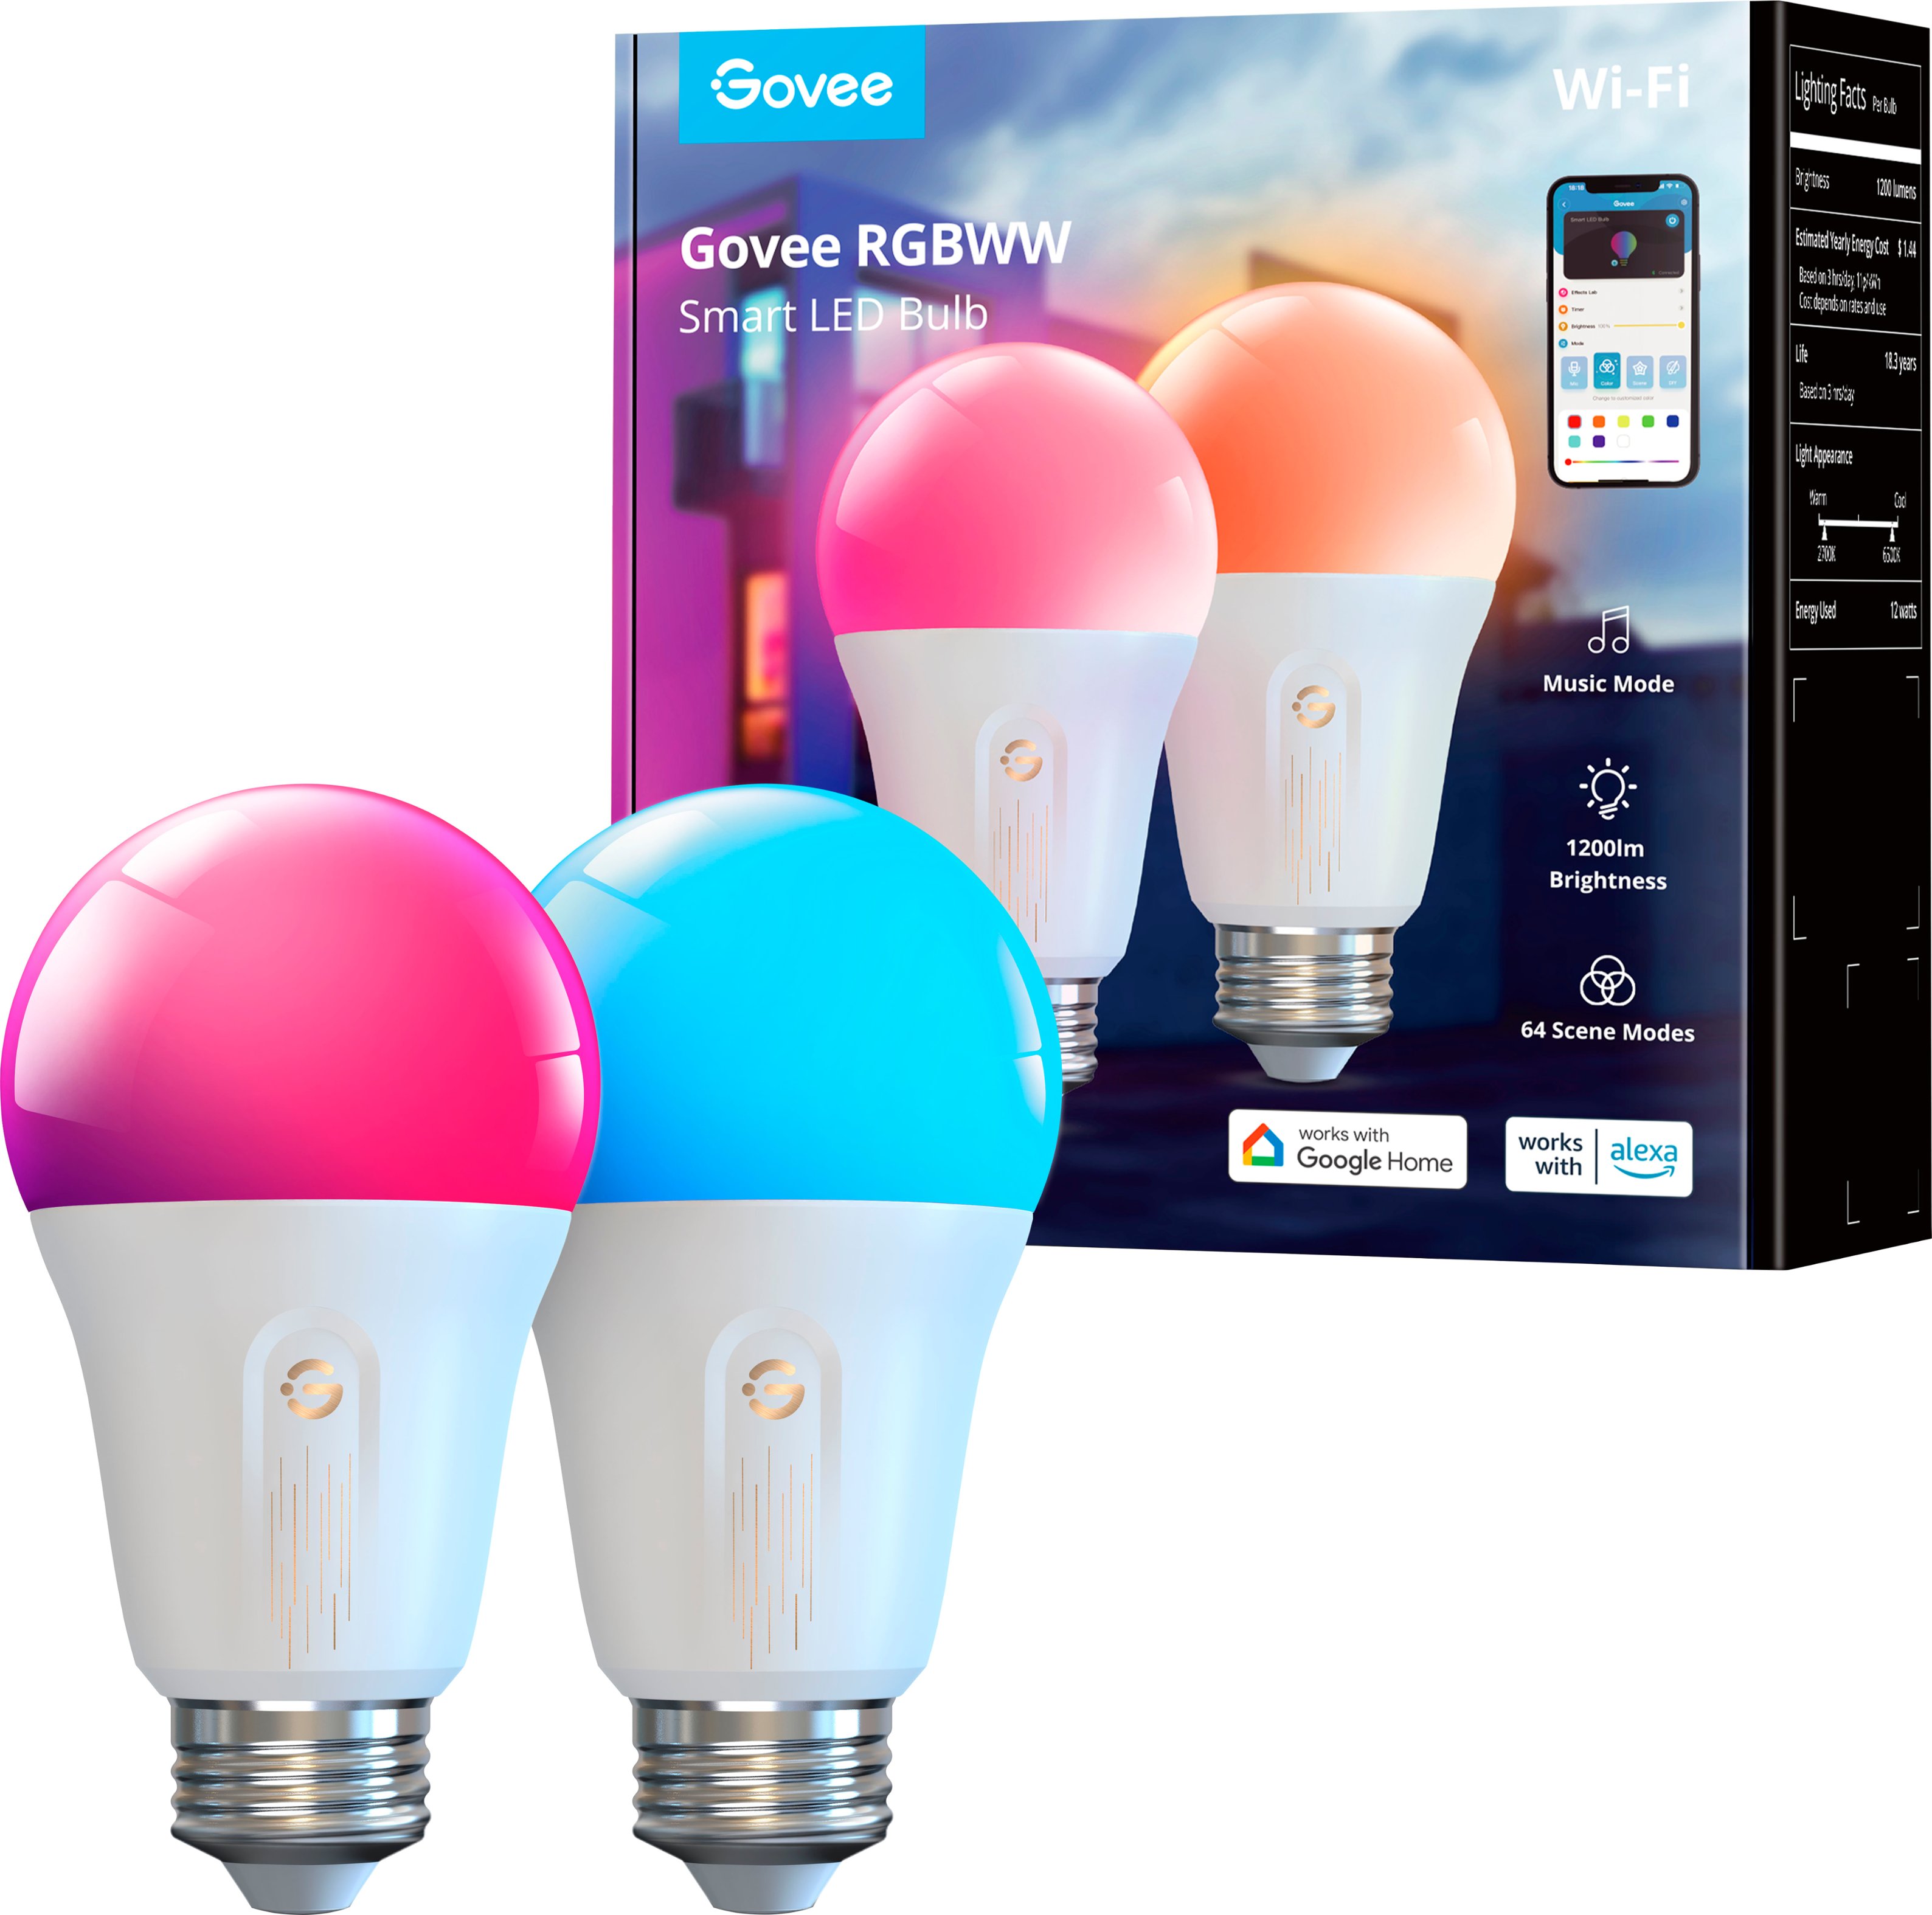 manuskript Kan Hælde Govee Wi-Fi 1200LM RGBWW LED Bulb (2-pack) RGB B6009AC1 - Best Buy